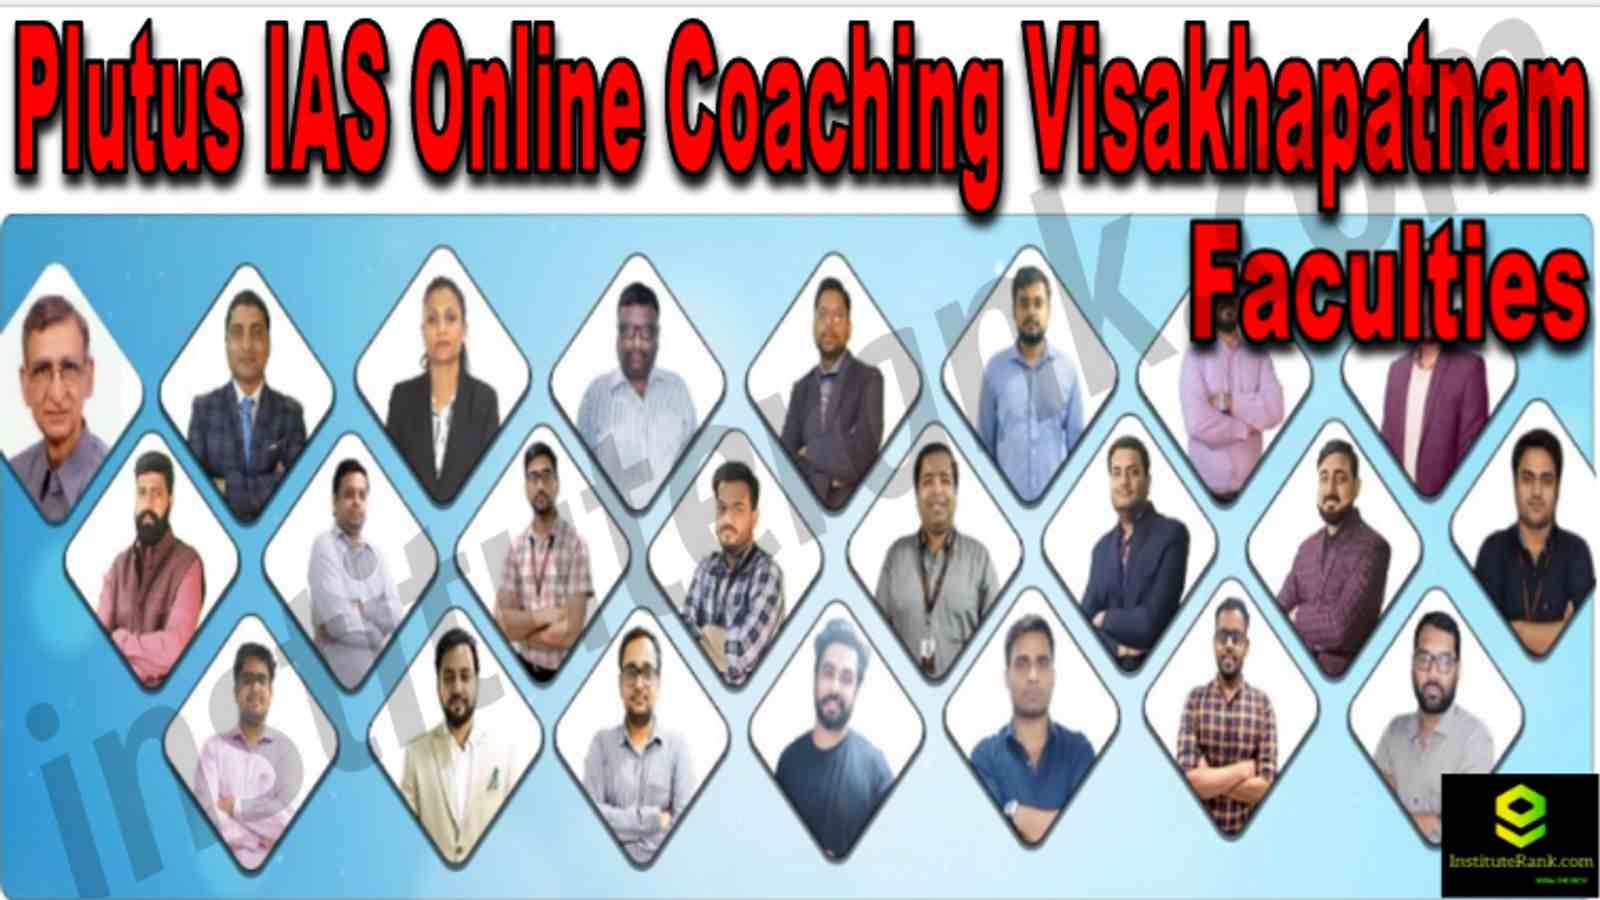 Plutus IAS Online Coaching Visakhapatnam Reviews Faculties